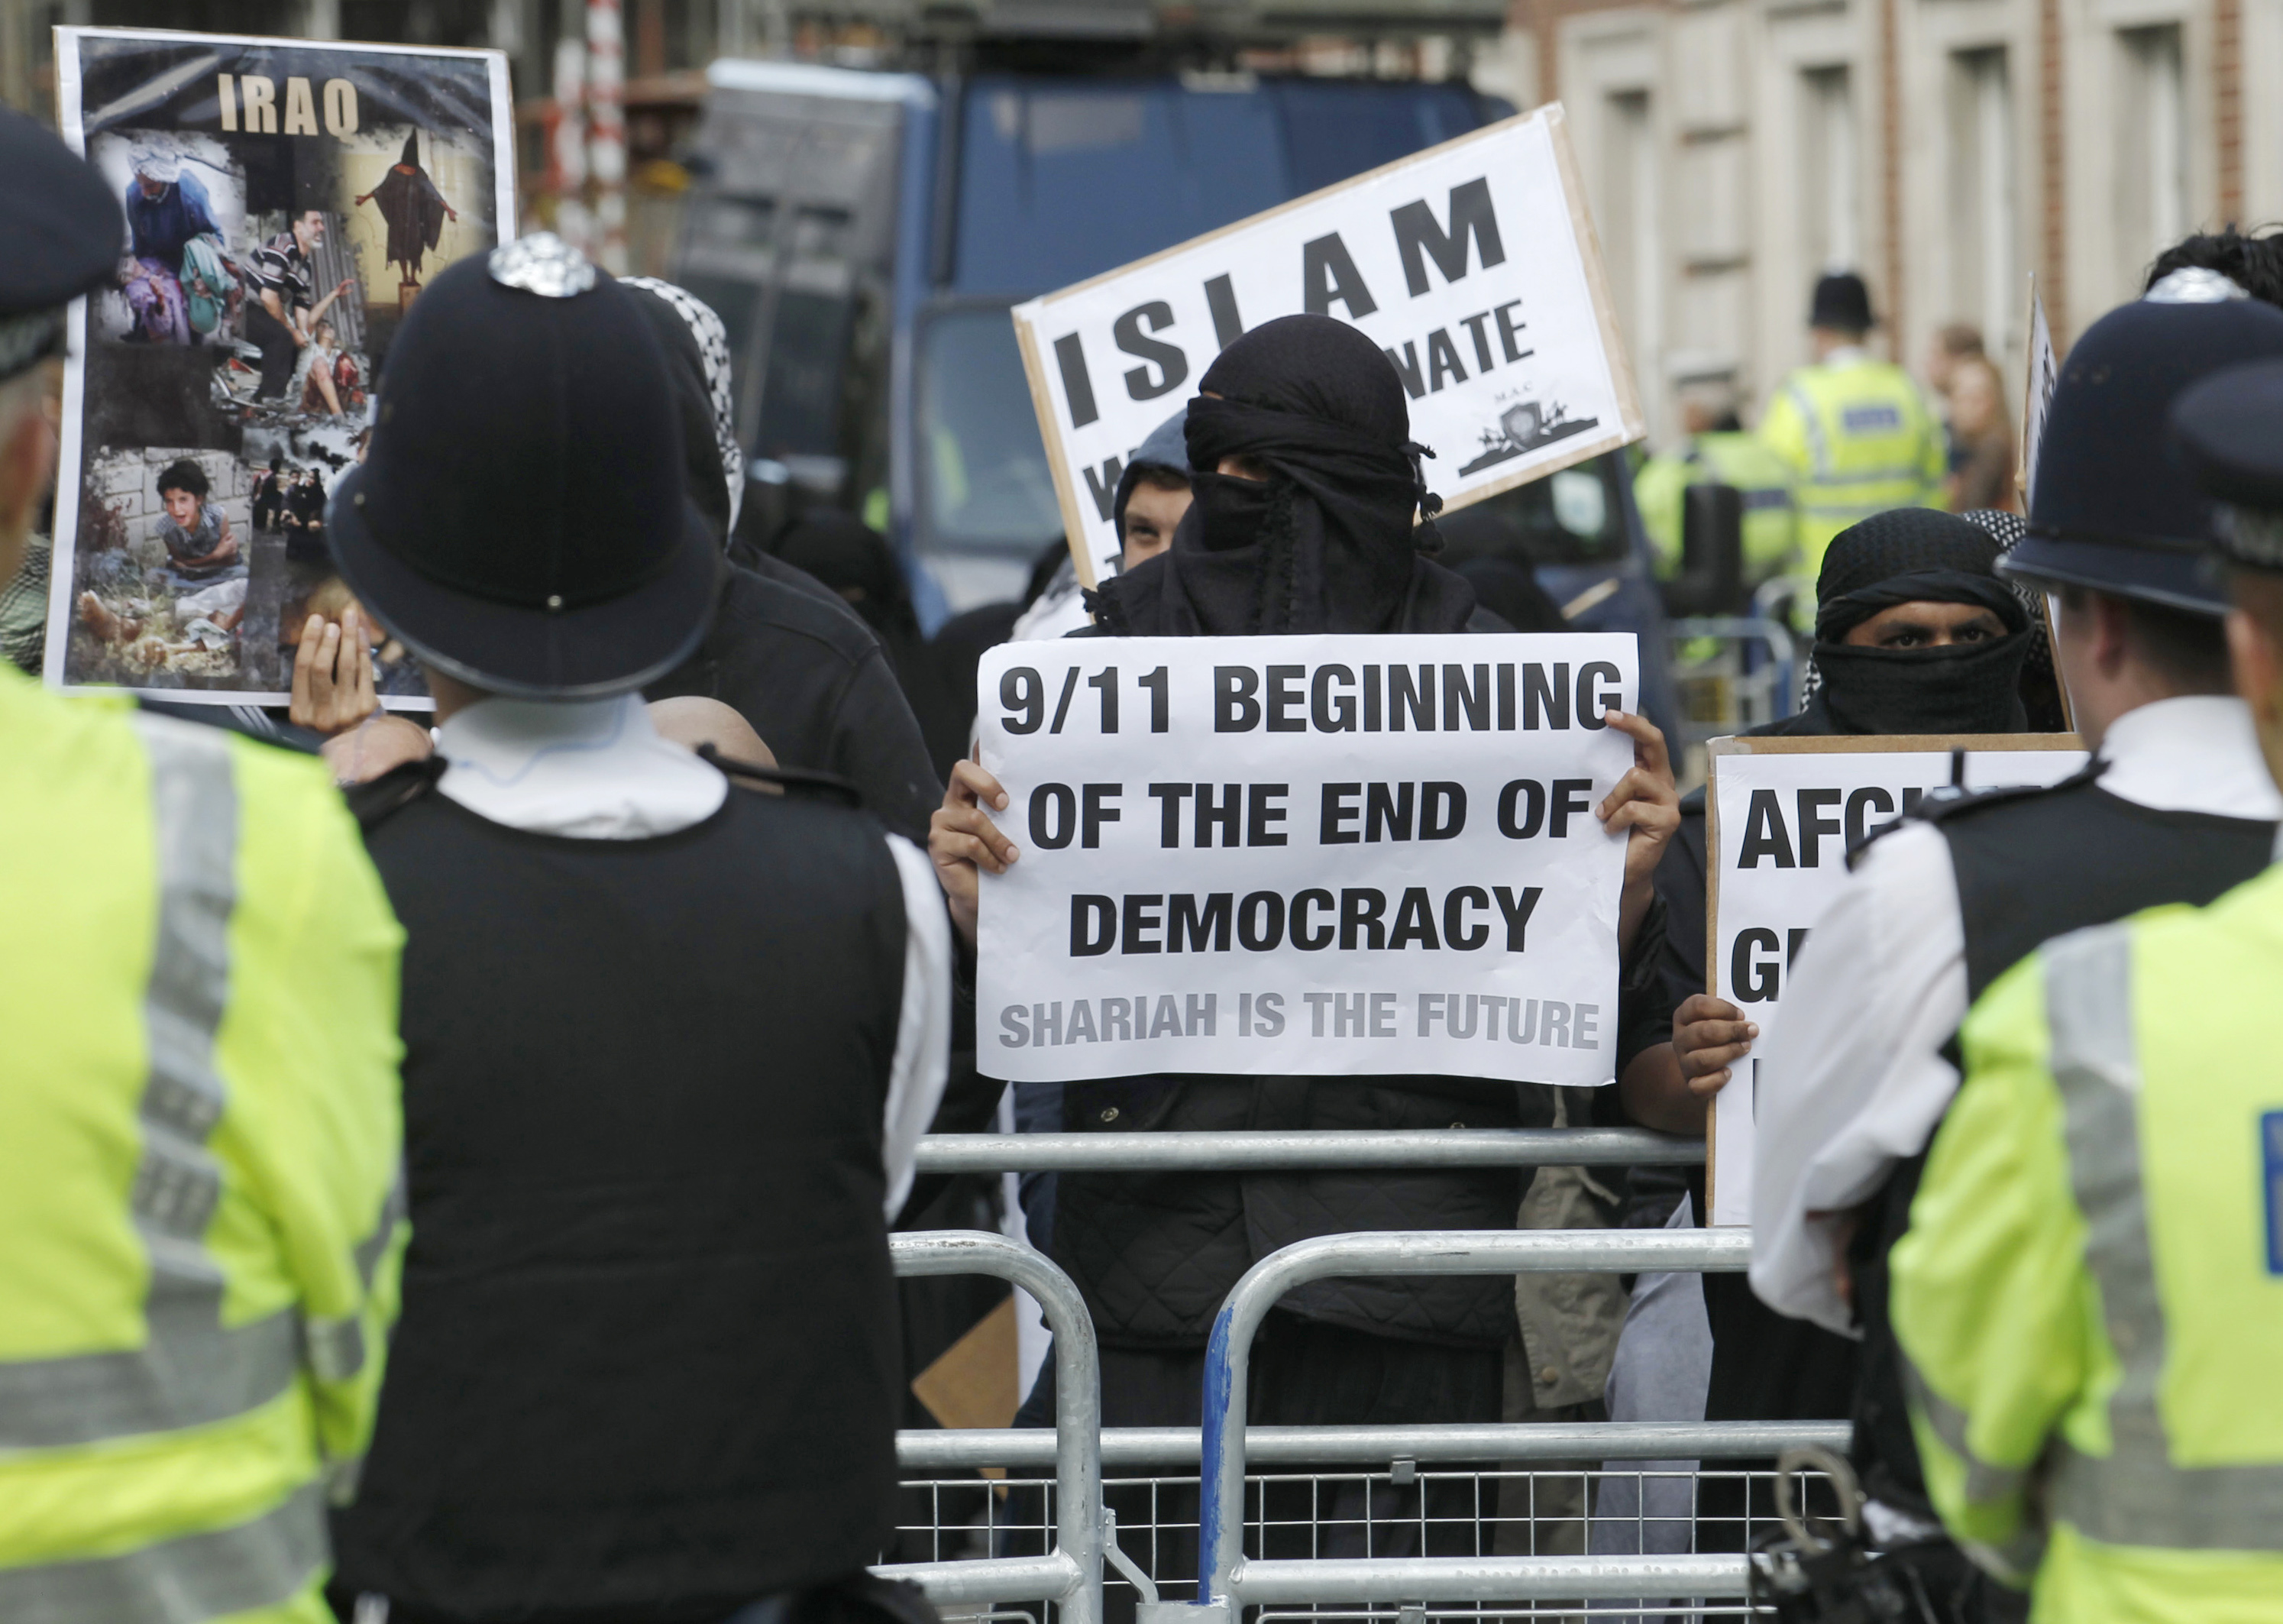 Islam, Muslimer, Forbud, Demonstration, England, Protester